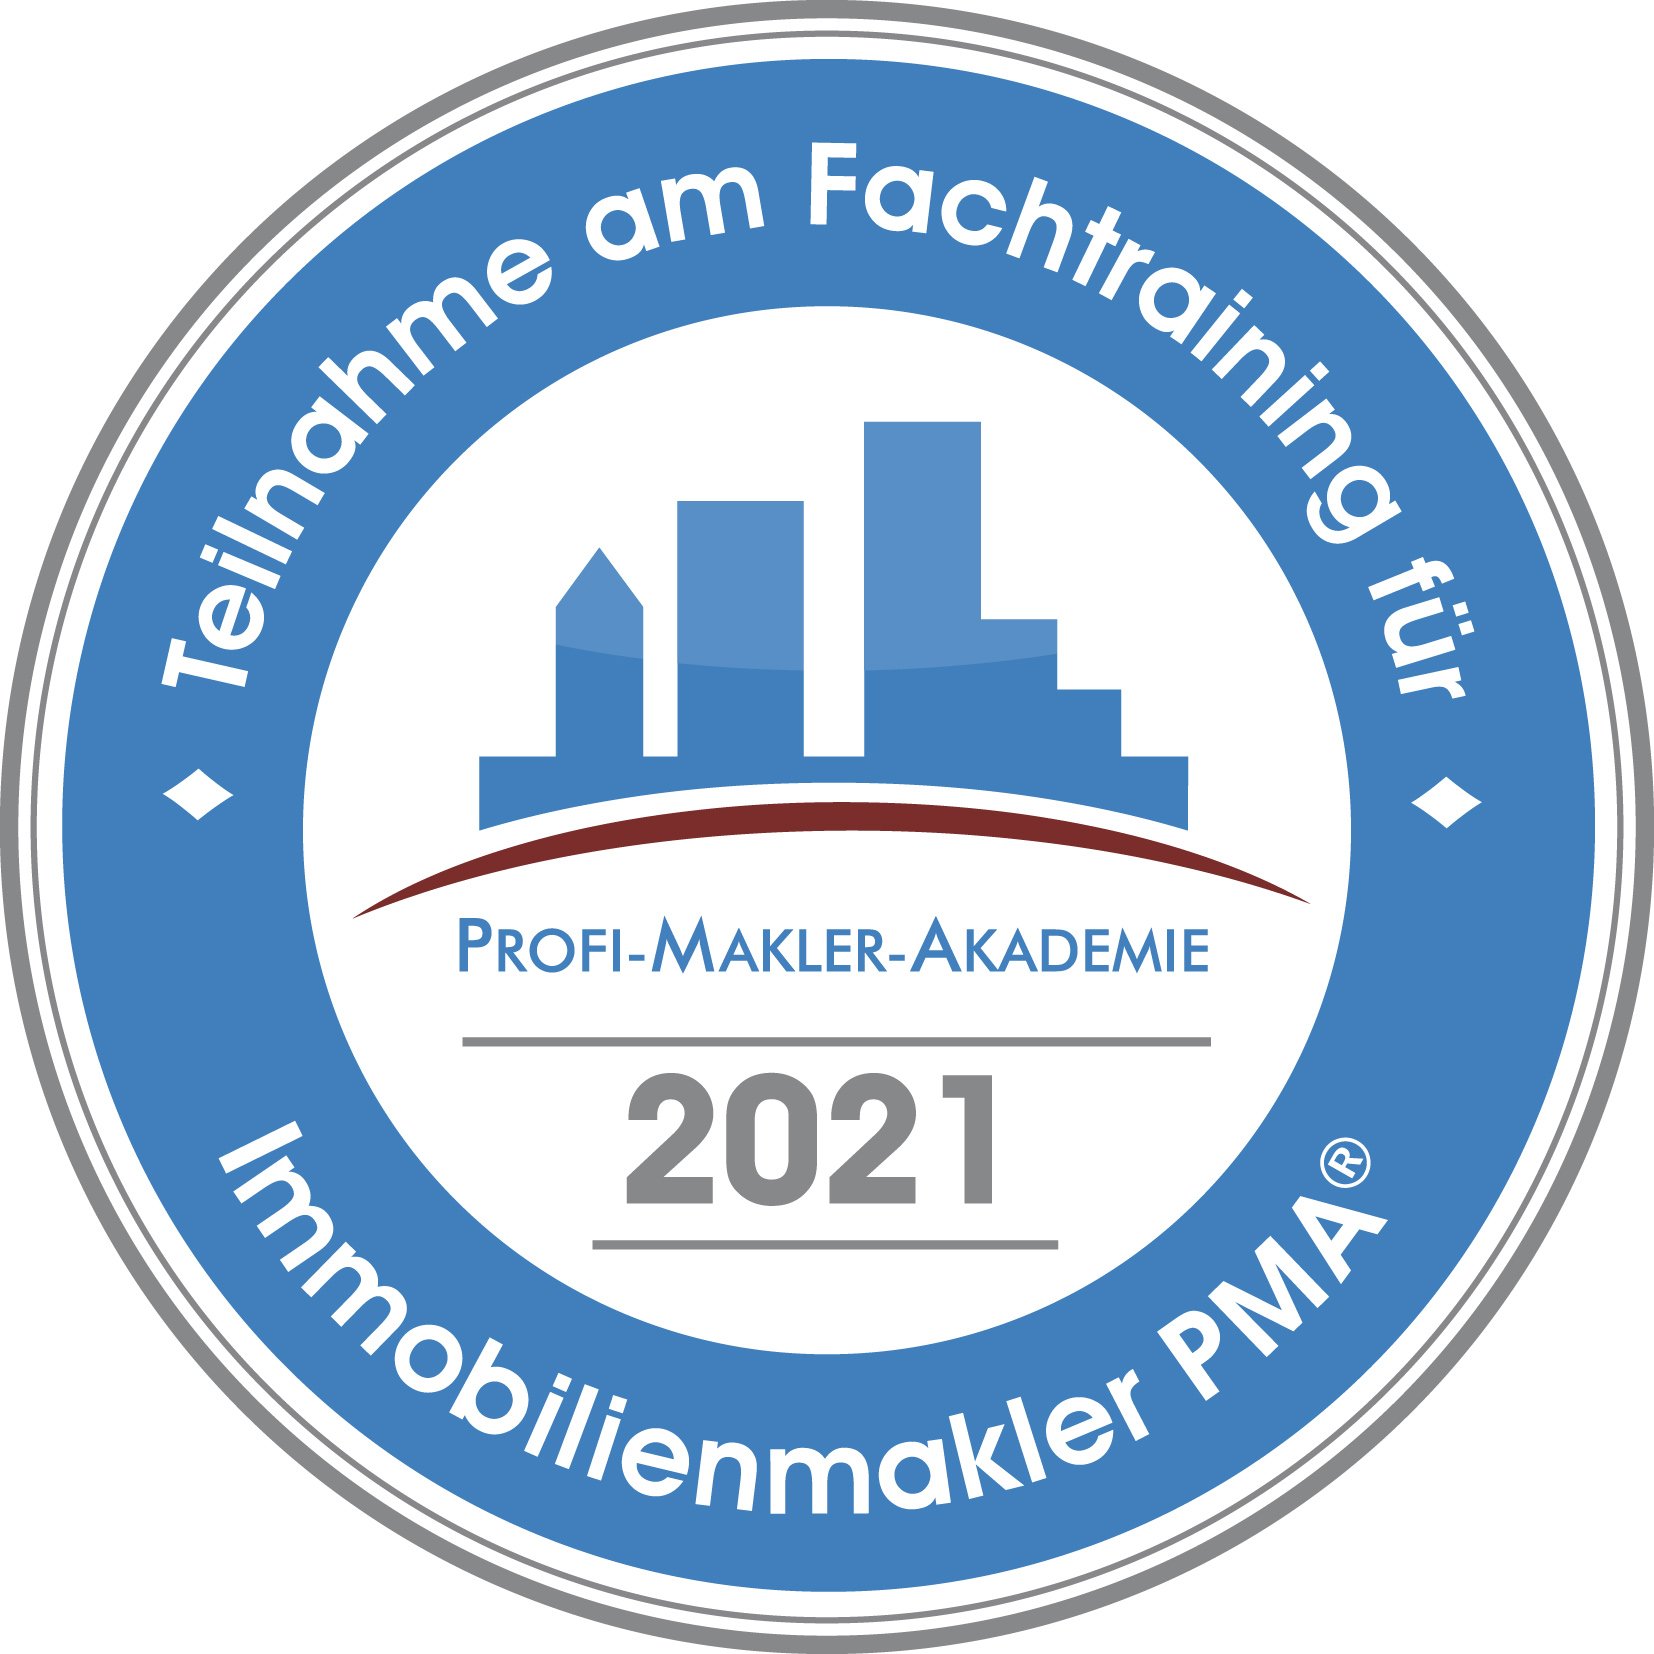 Siegel Fachtraining fuer Immobilienmakler PMA 2021